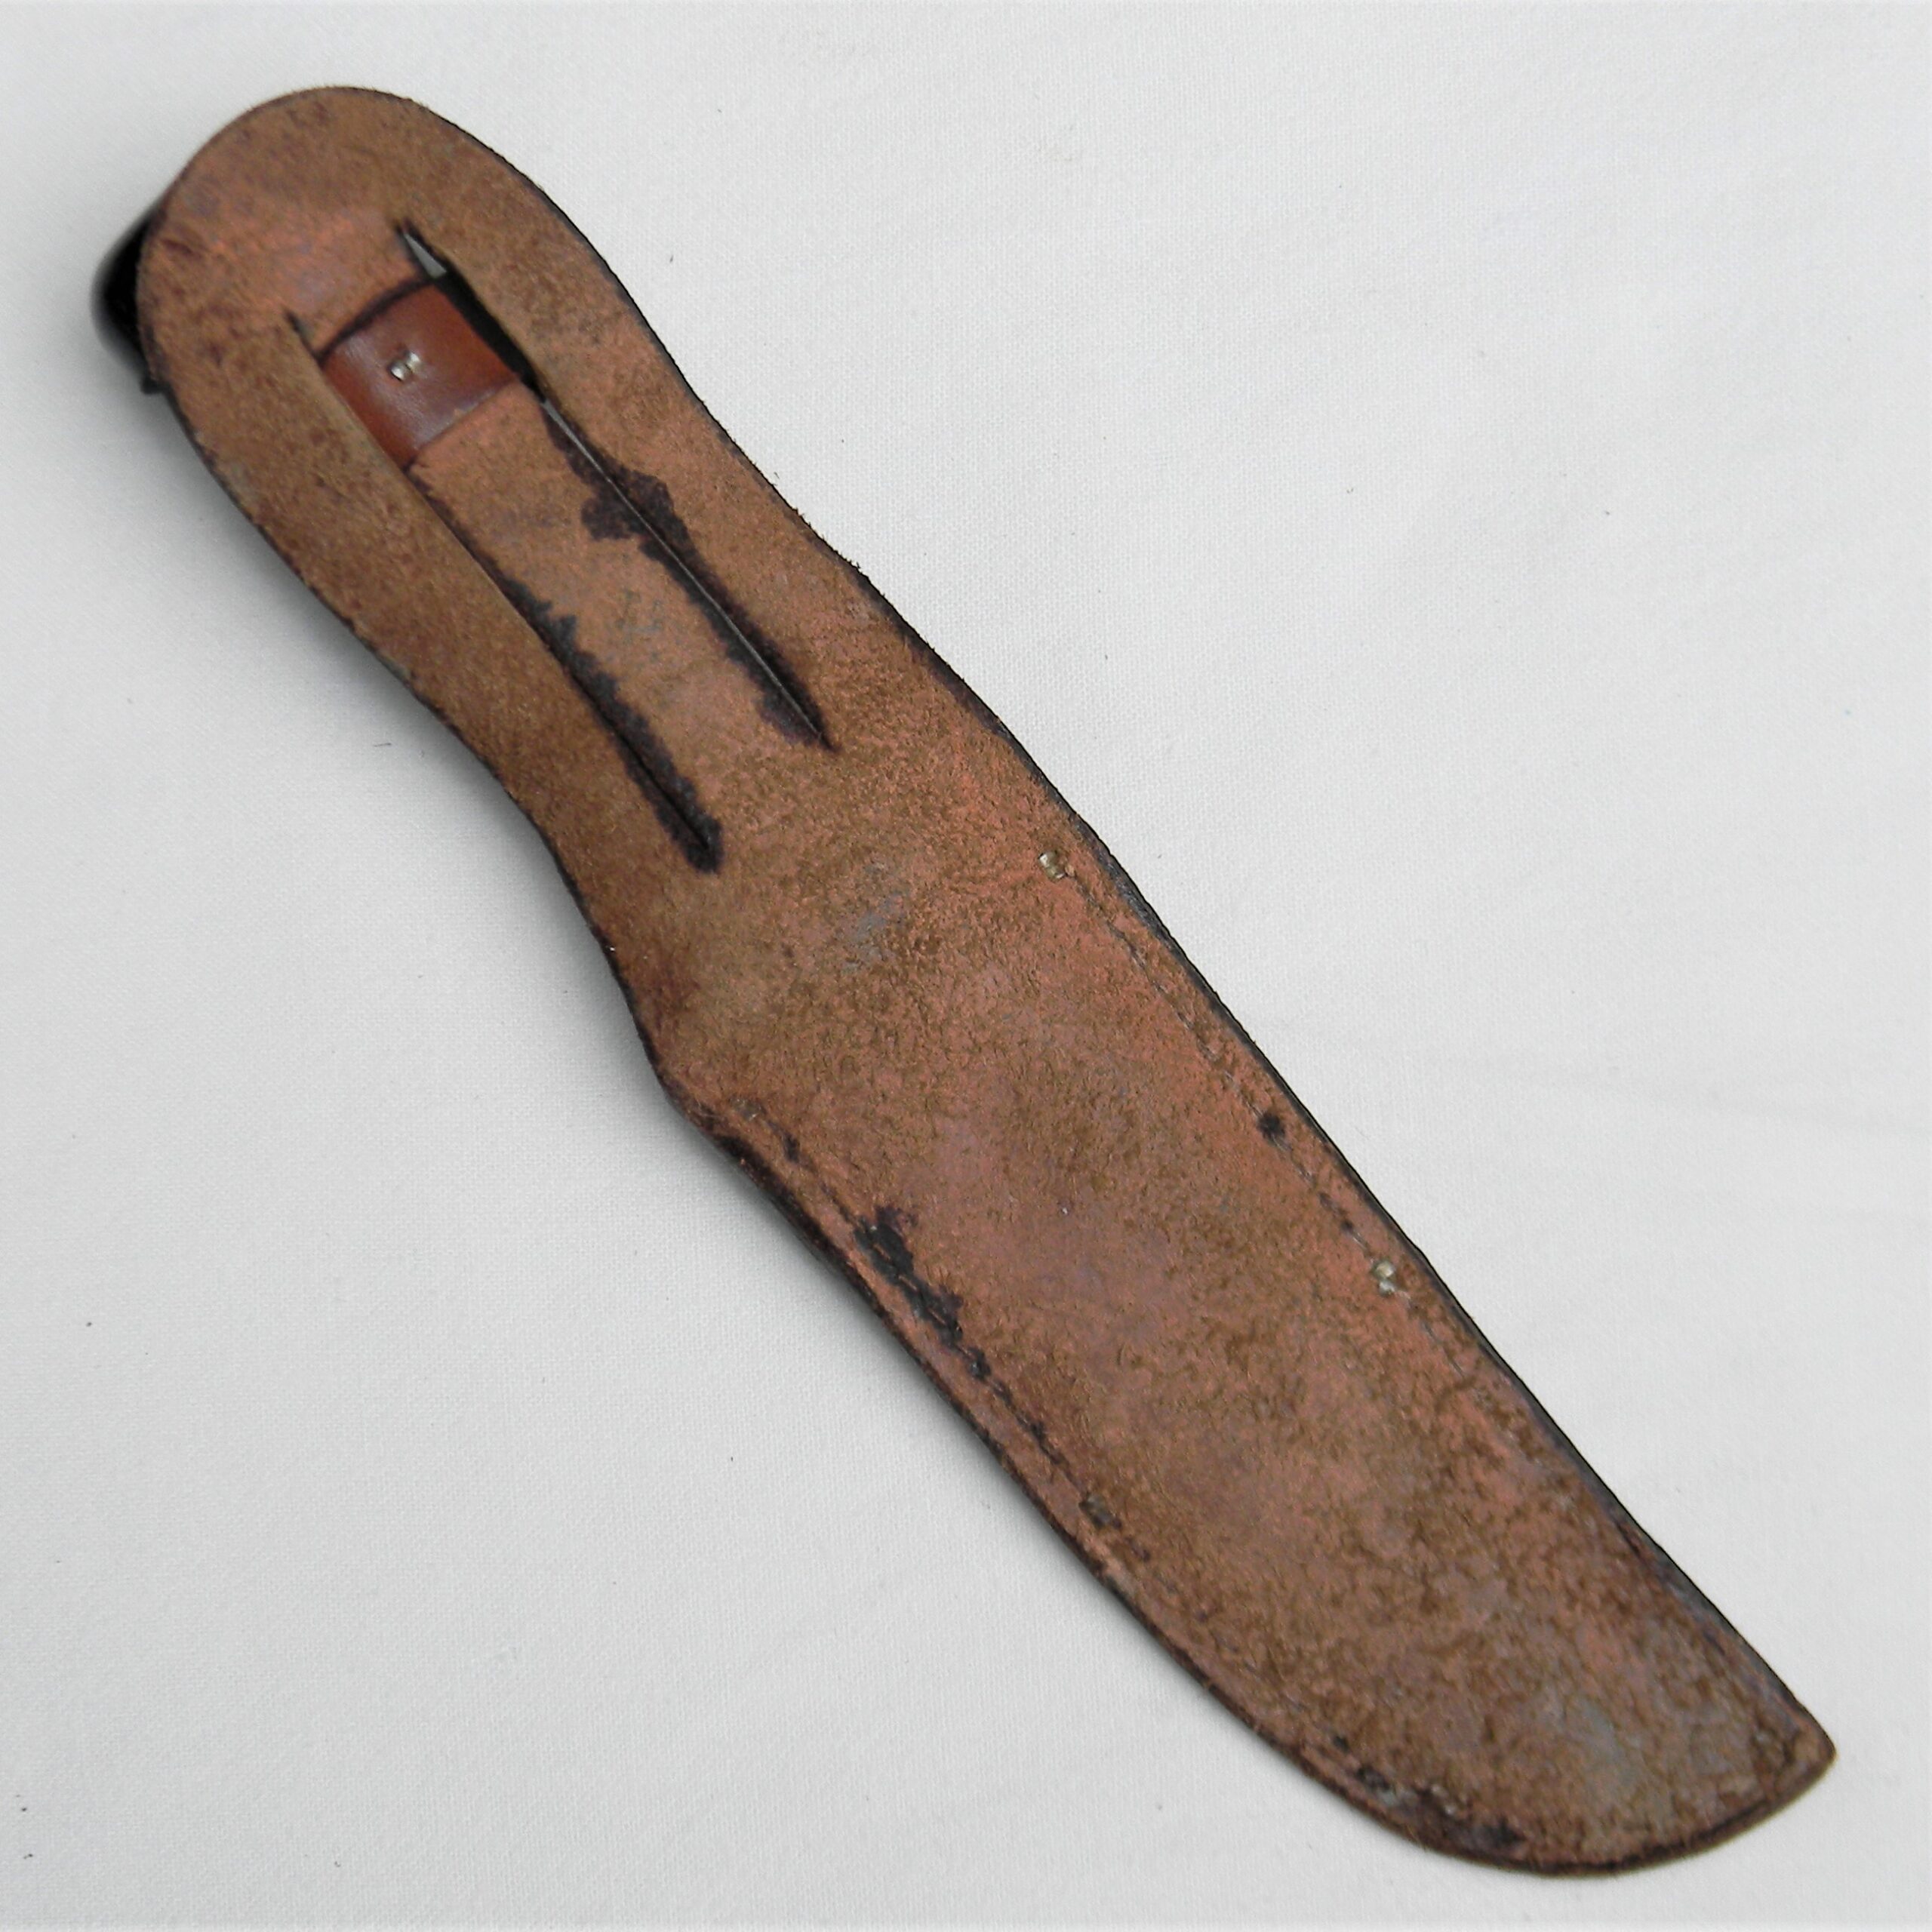 RARE ANCIENT HAZARDS COMBAT KNIVES 6-9 centuries ORIGINAL IRON 